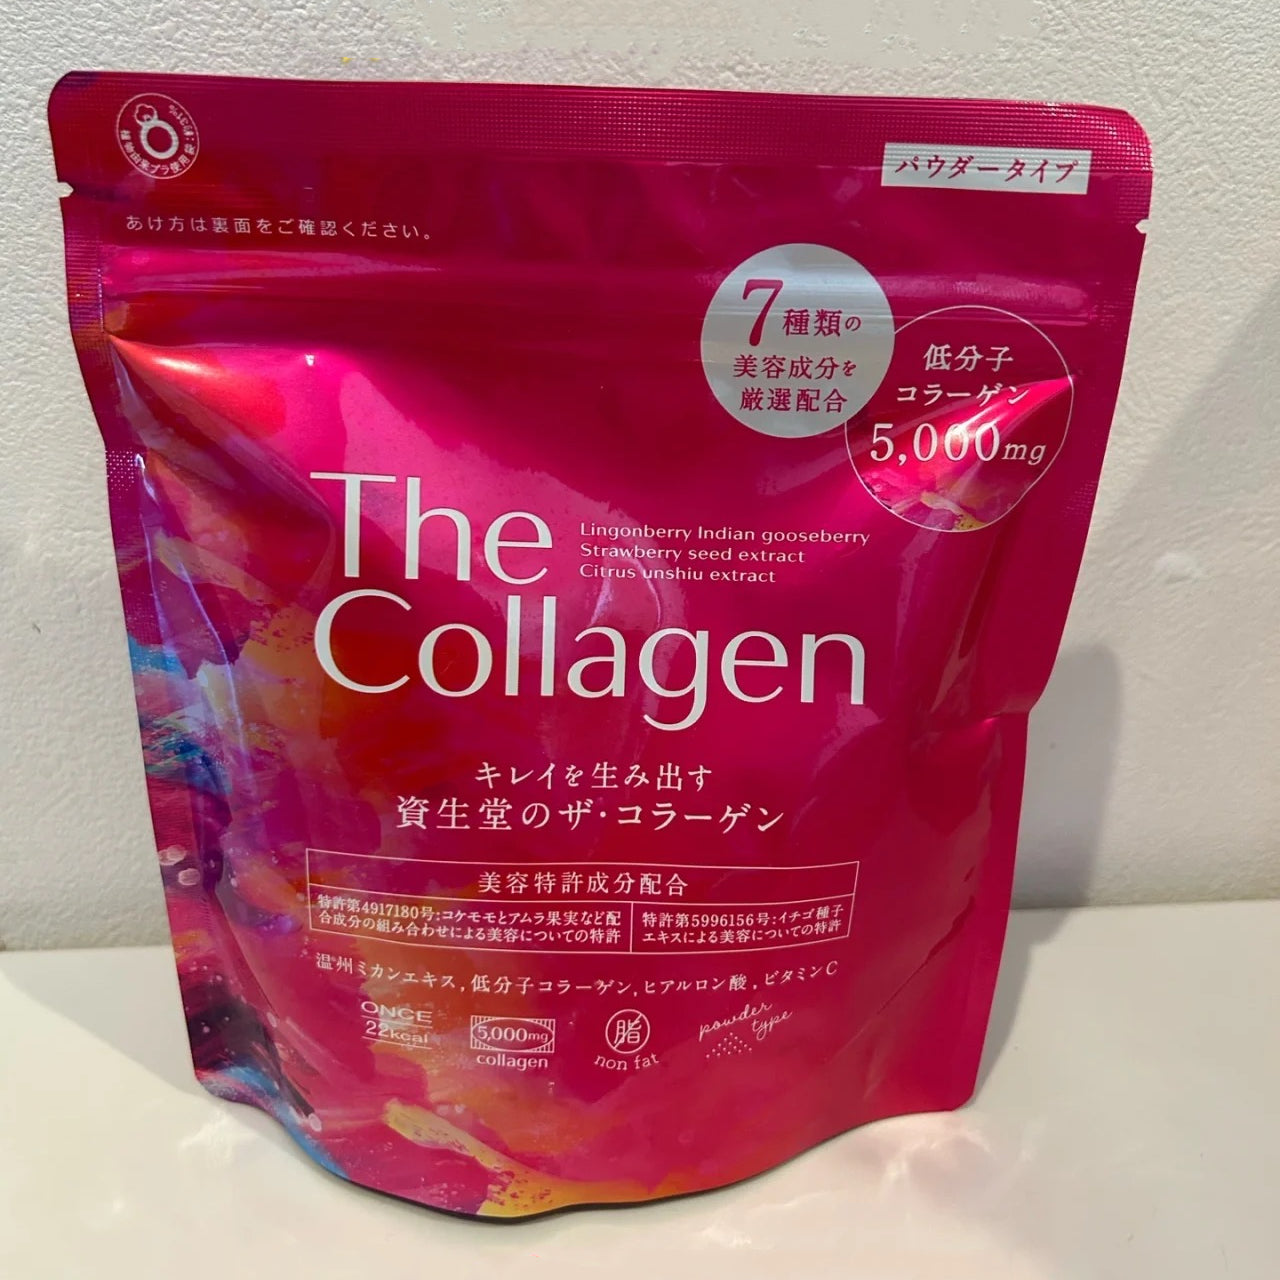 Shiseido The Collagen Powder Beauty Supplement 126g